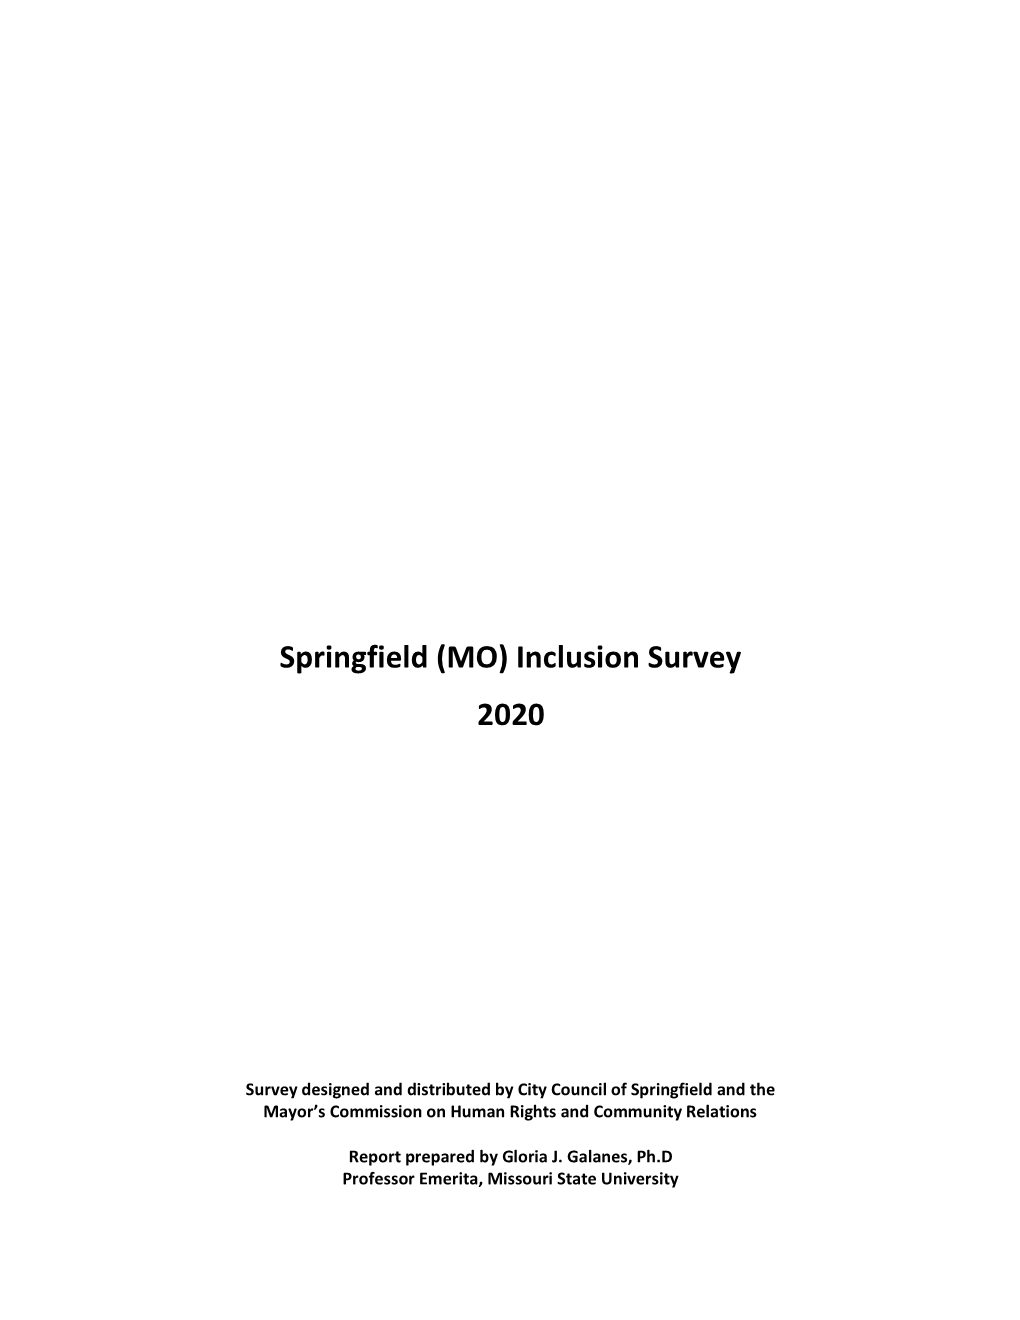 Inclusion Survey 2020